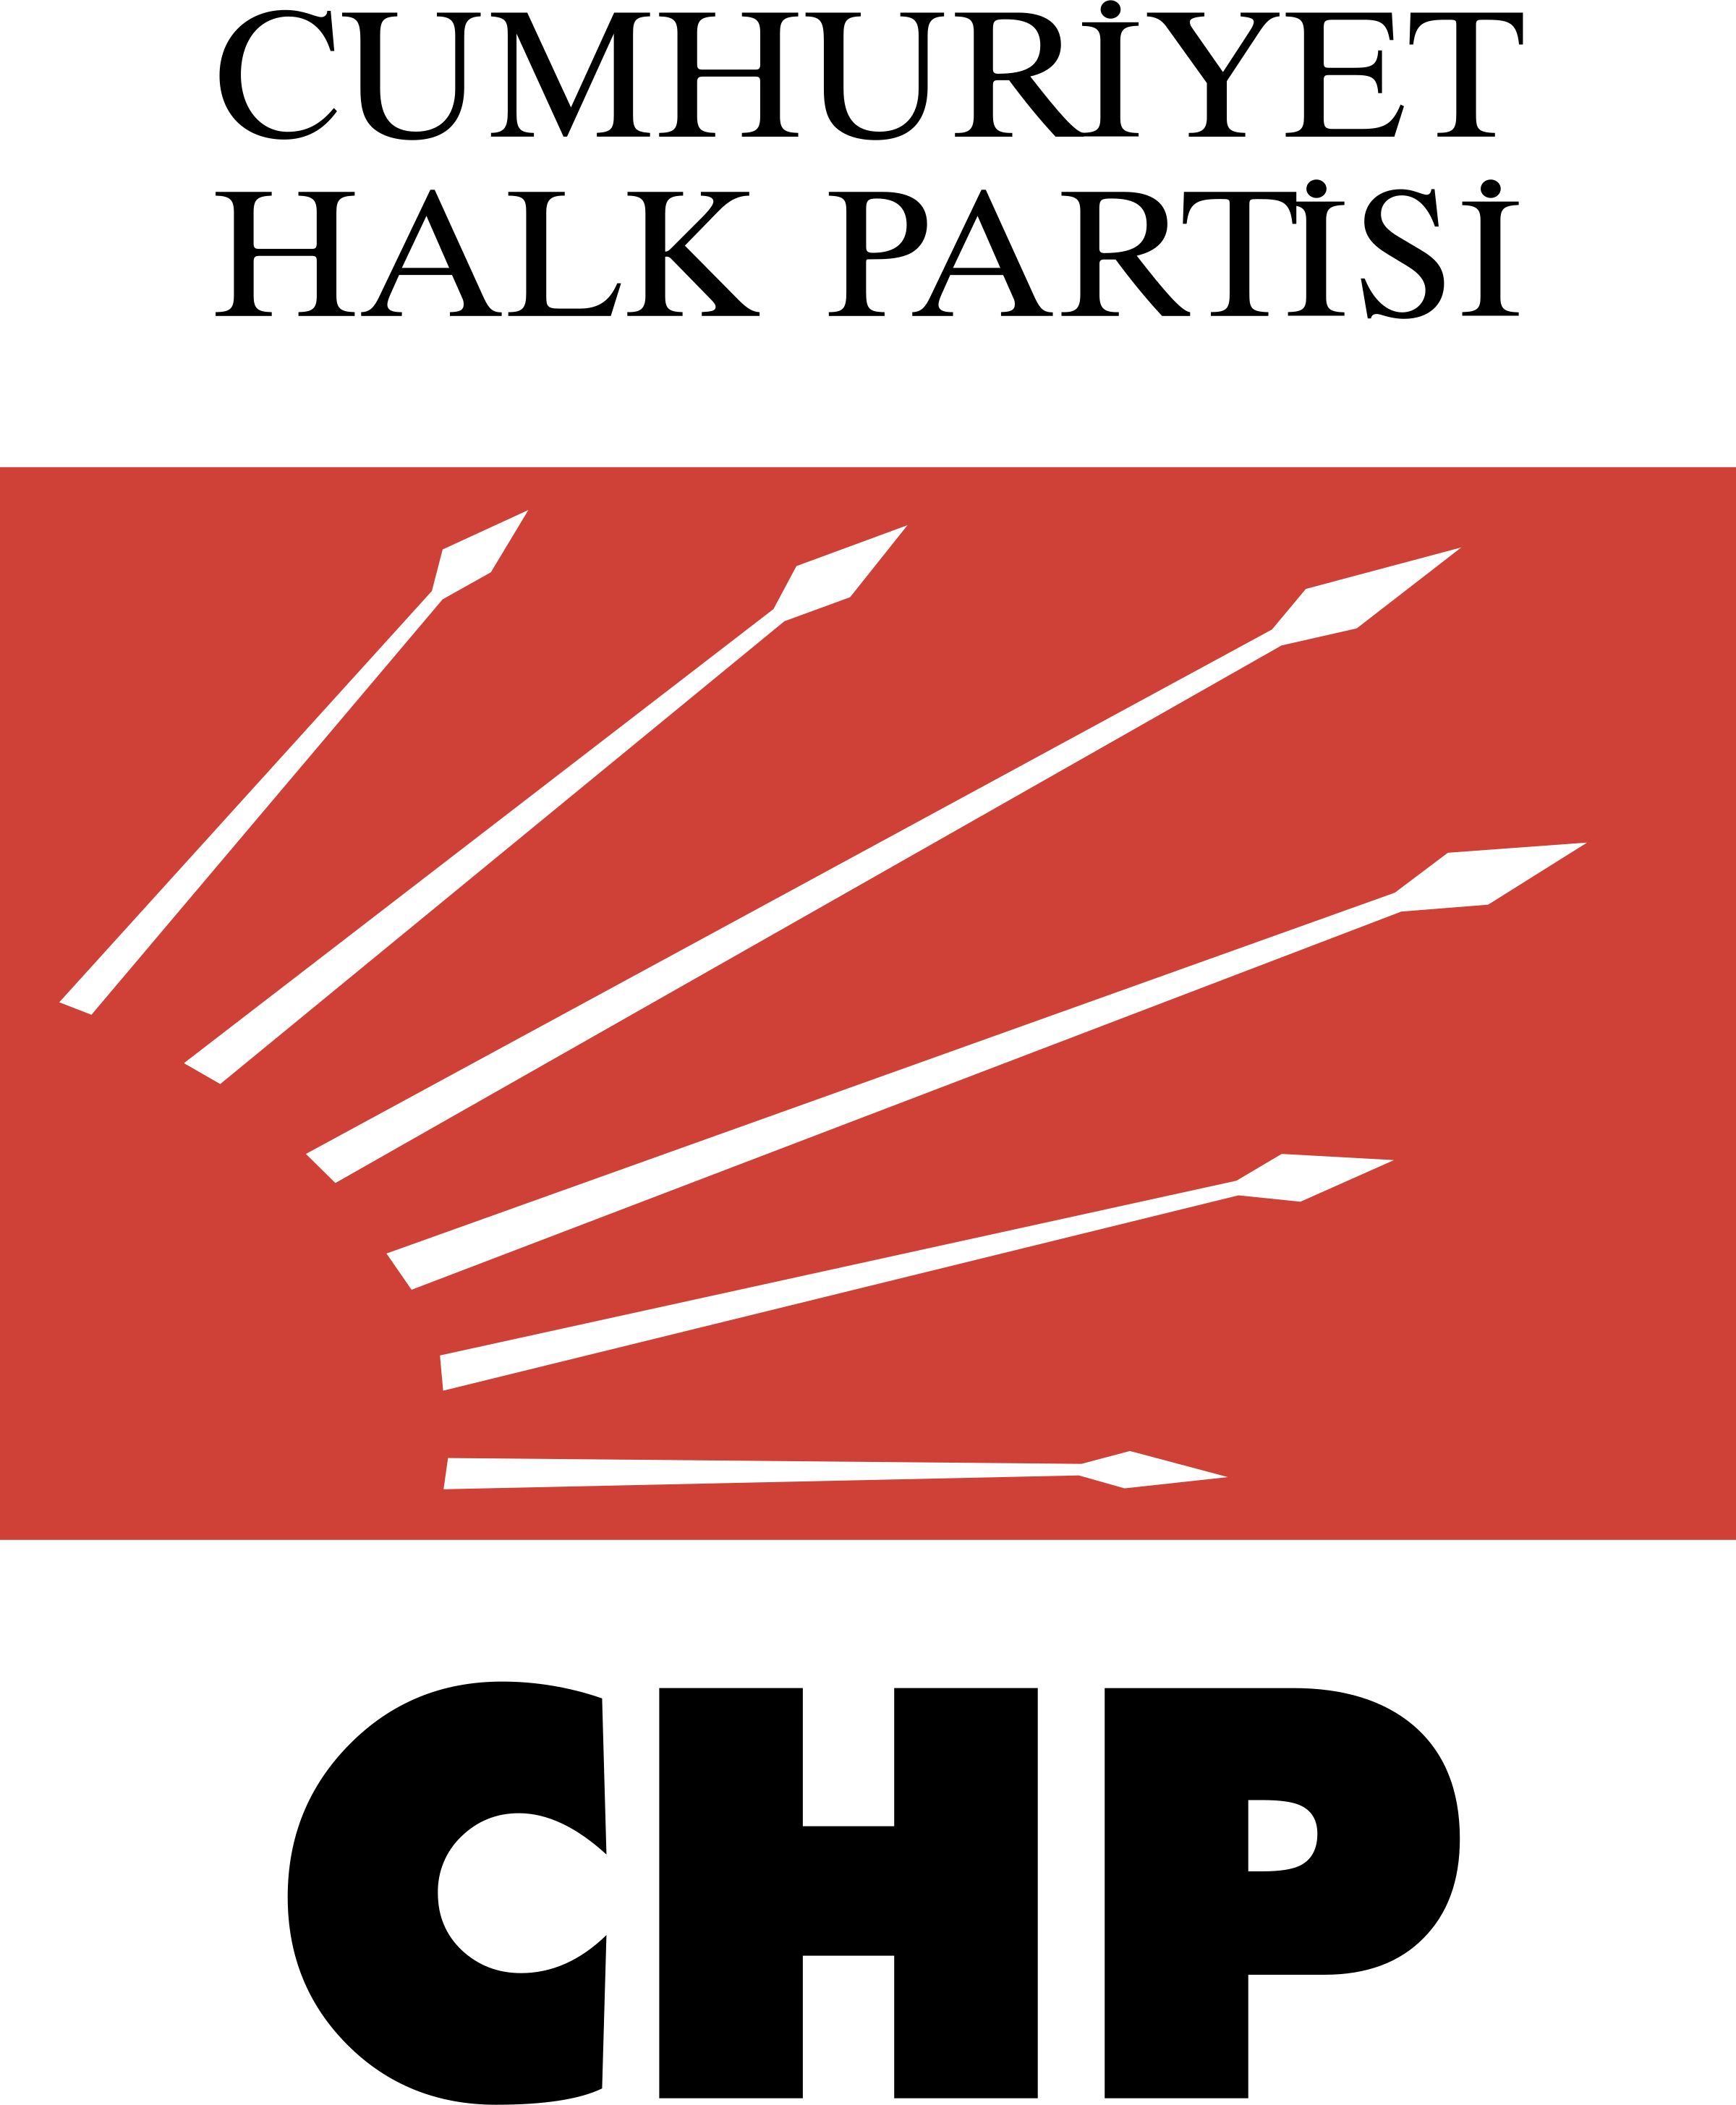 CHP Logo - CHP Logo PNG Transparent & SVG Vector - Freebie Supply